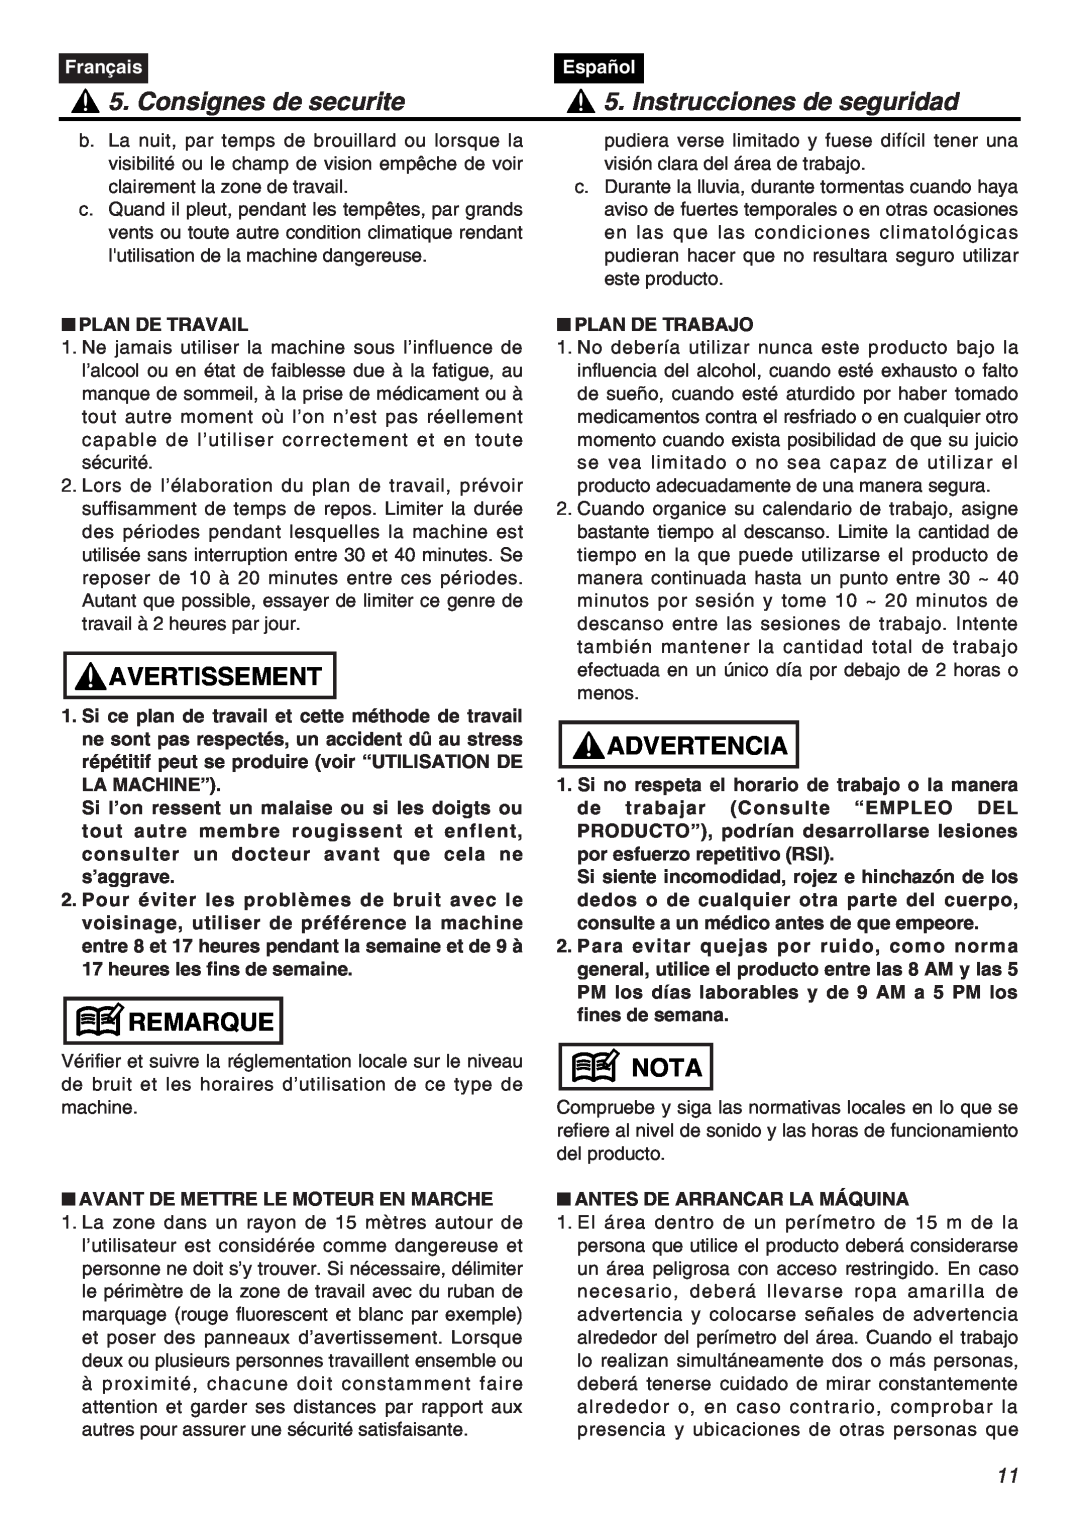 RedMax CHTZ2401L-CA Consignes de securite, Instrucciones de seguridad, Avertissement, Remarque, Advertencia, Nota, Español 